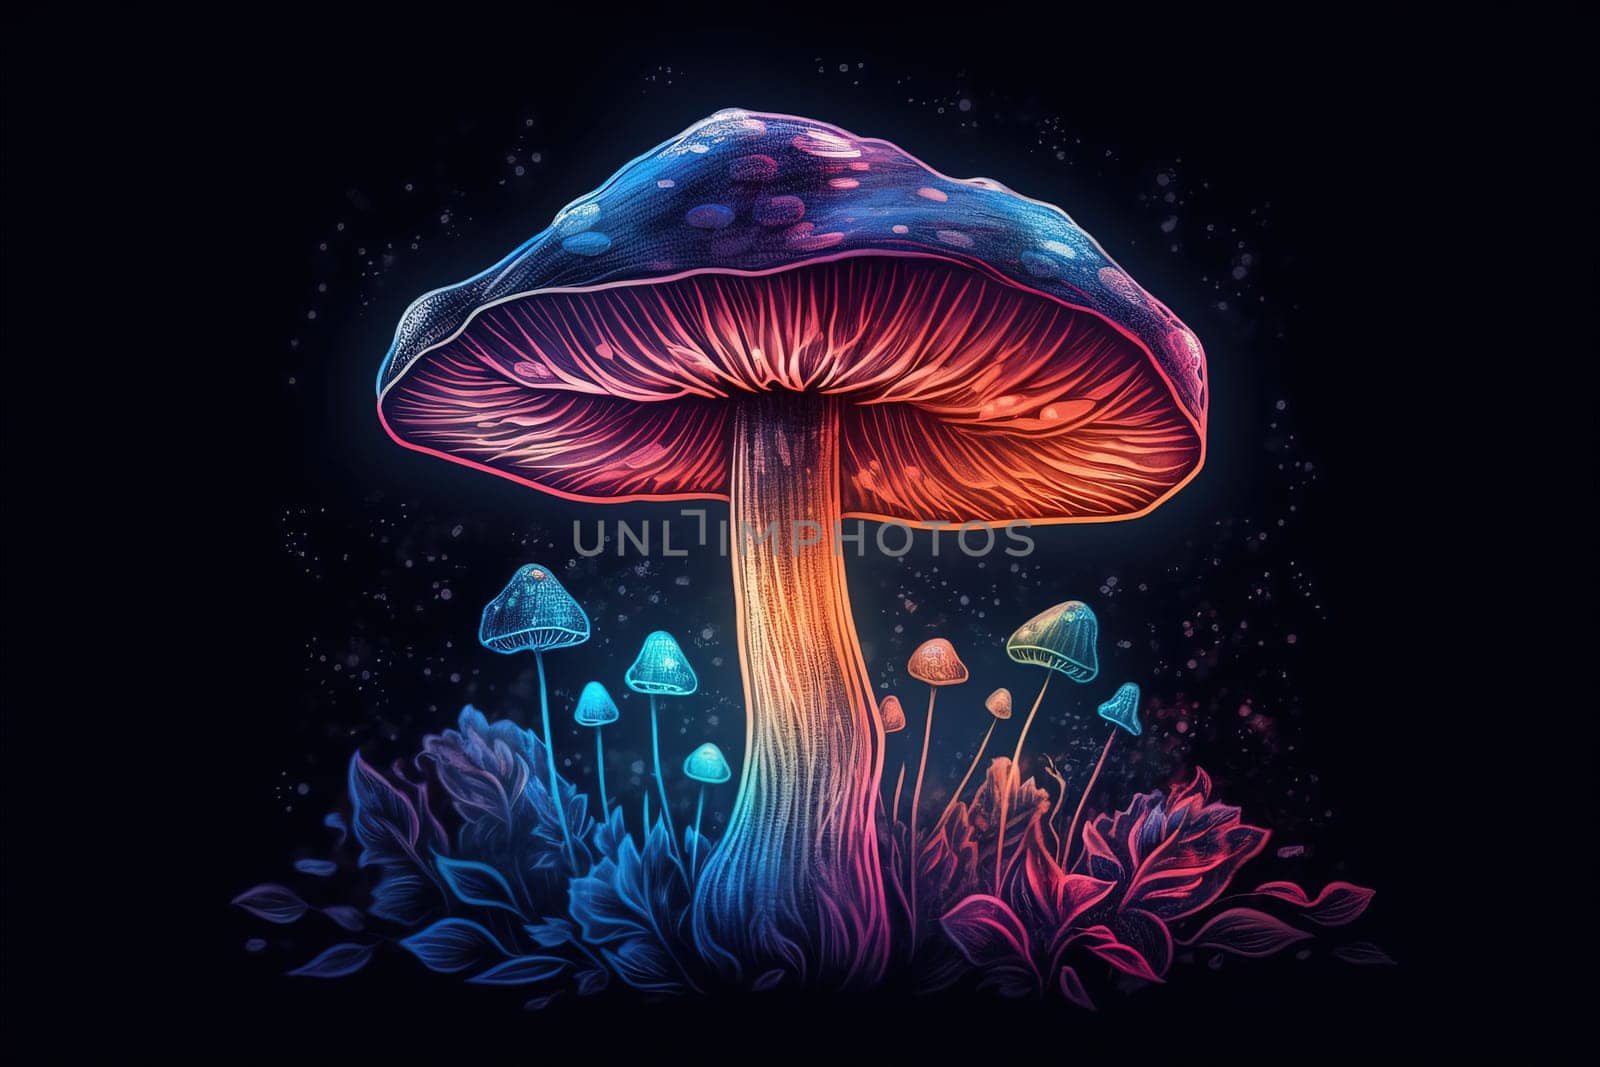 Neon Illustration Of Big Magic Mushroom by GekaSkr